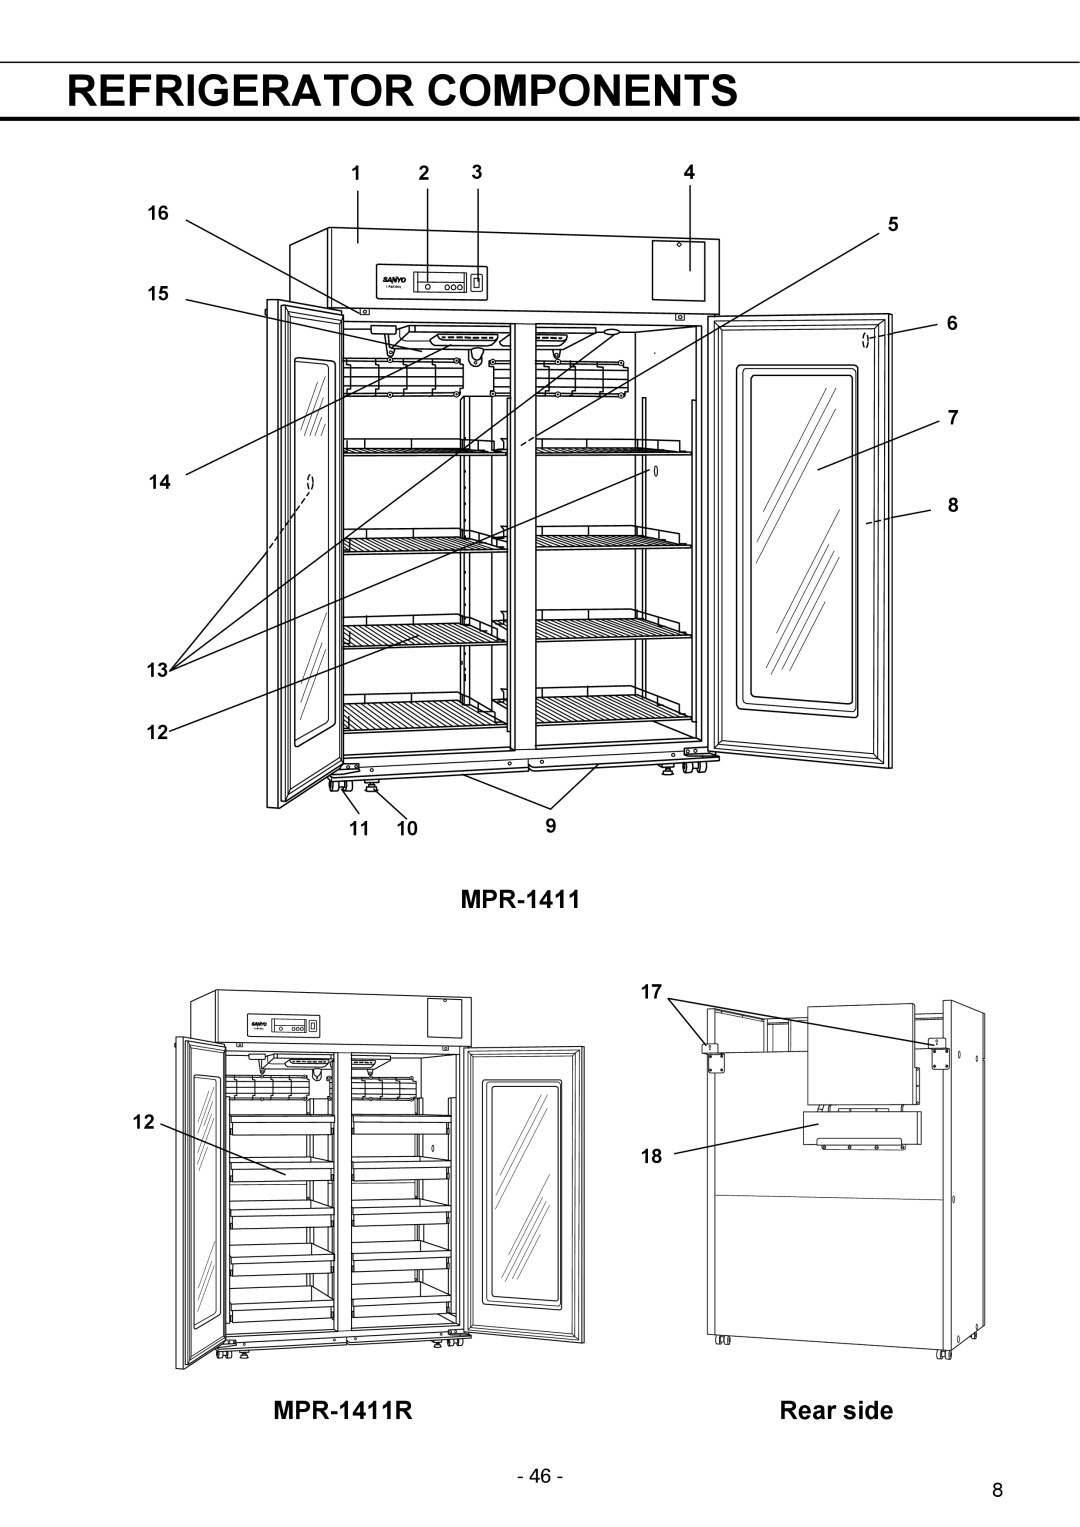 Sanyo MPR-1411R instruction manual Refrigerator Components, Rear side 